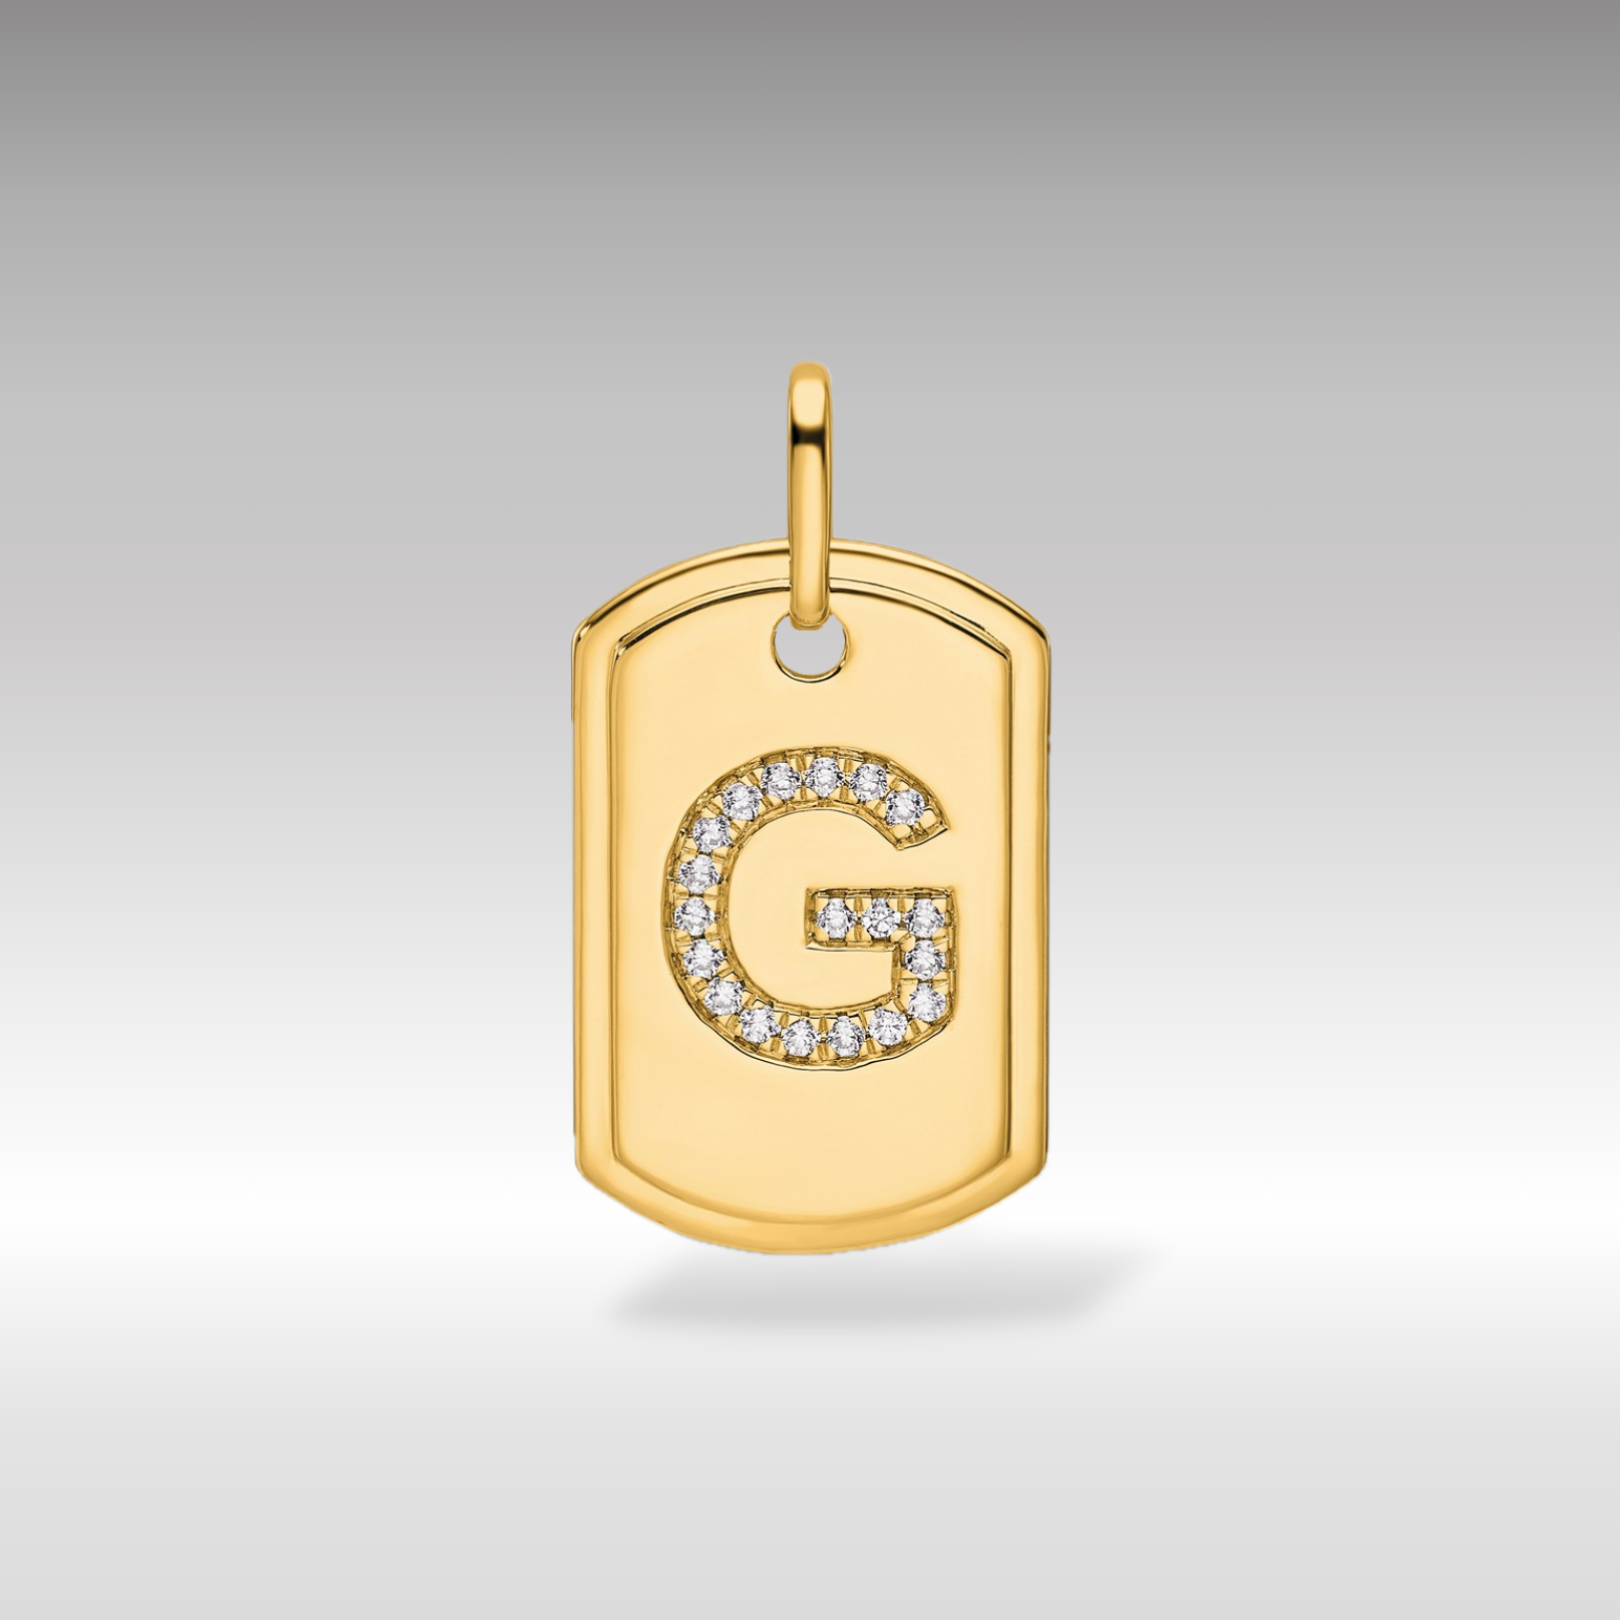 14K Gold Initial "G" Dog Tag With Genuine Diamonds - Charlie & Co. Jewelry